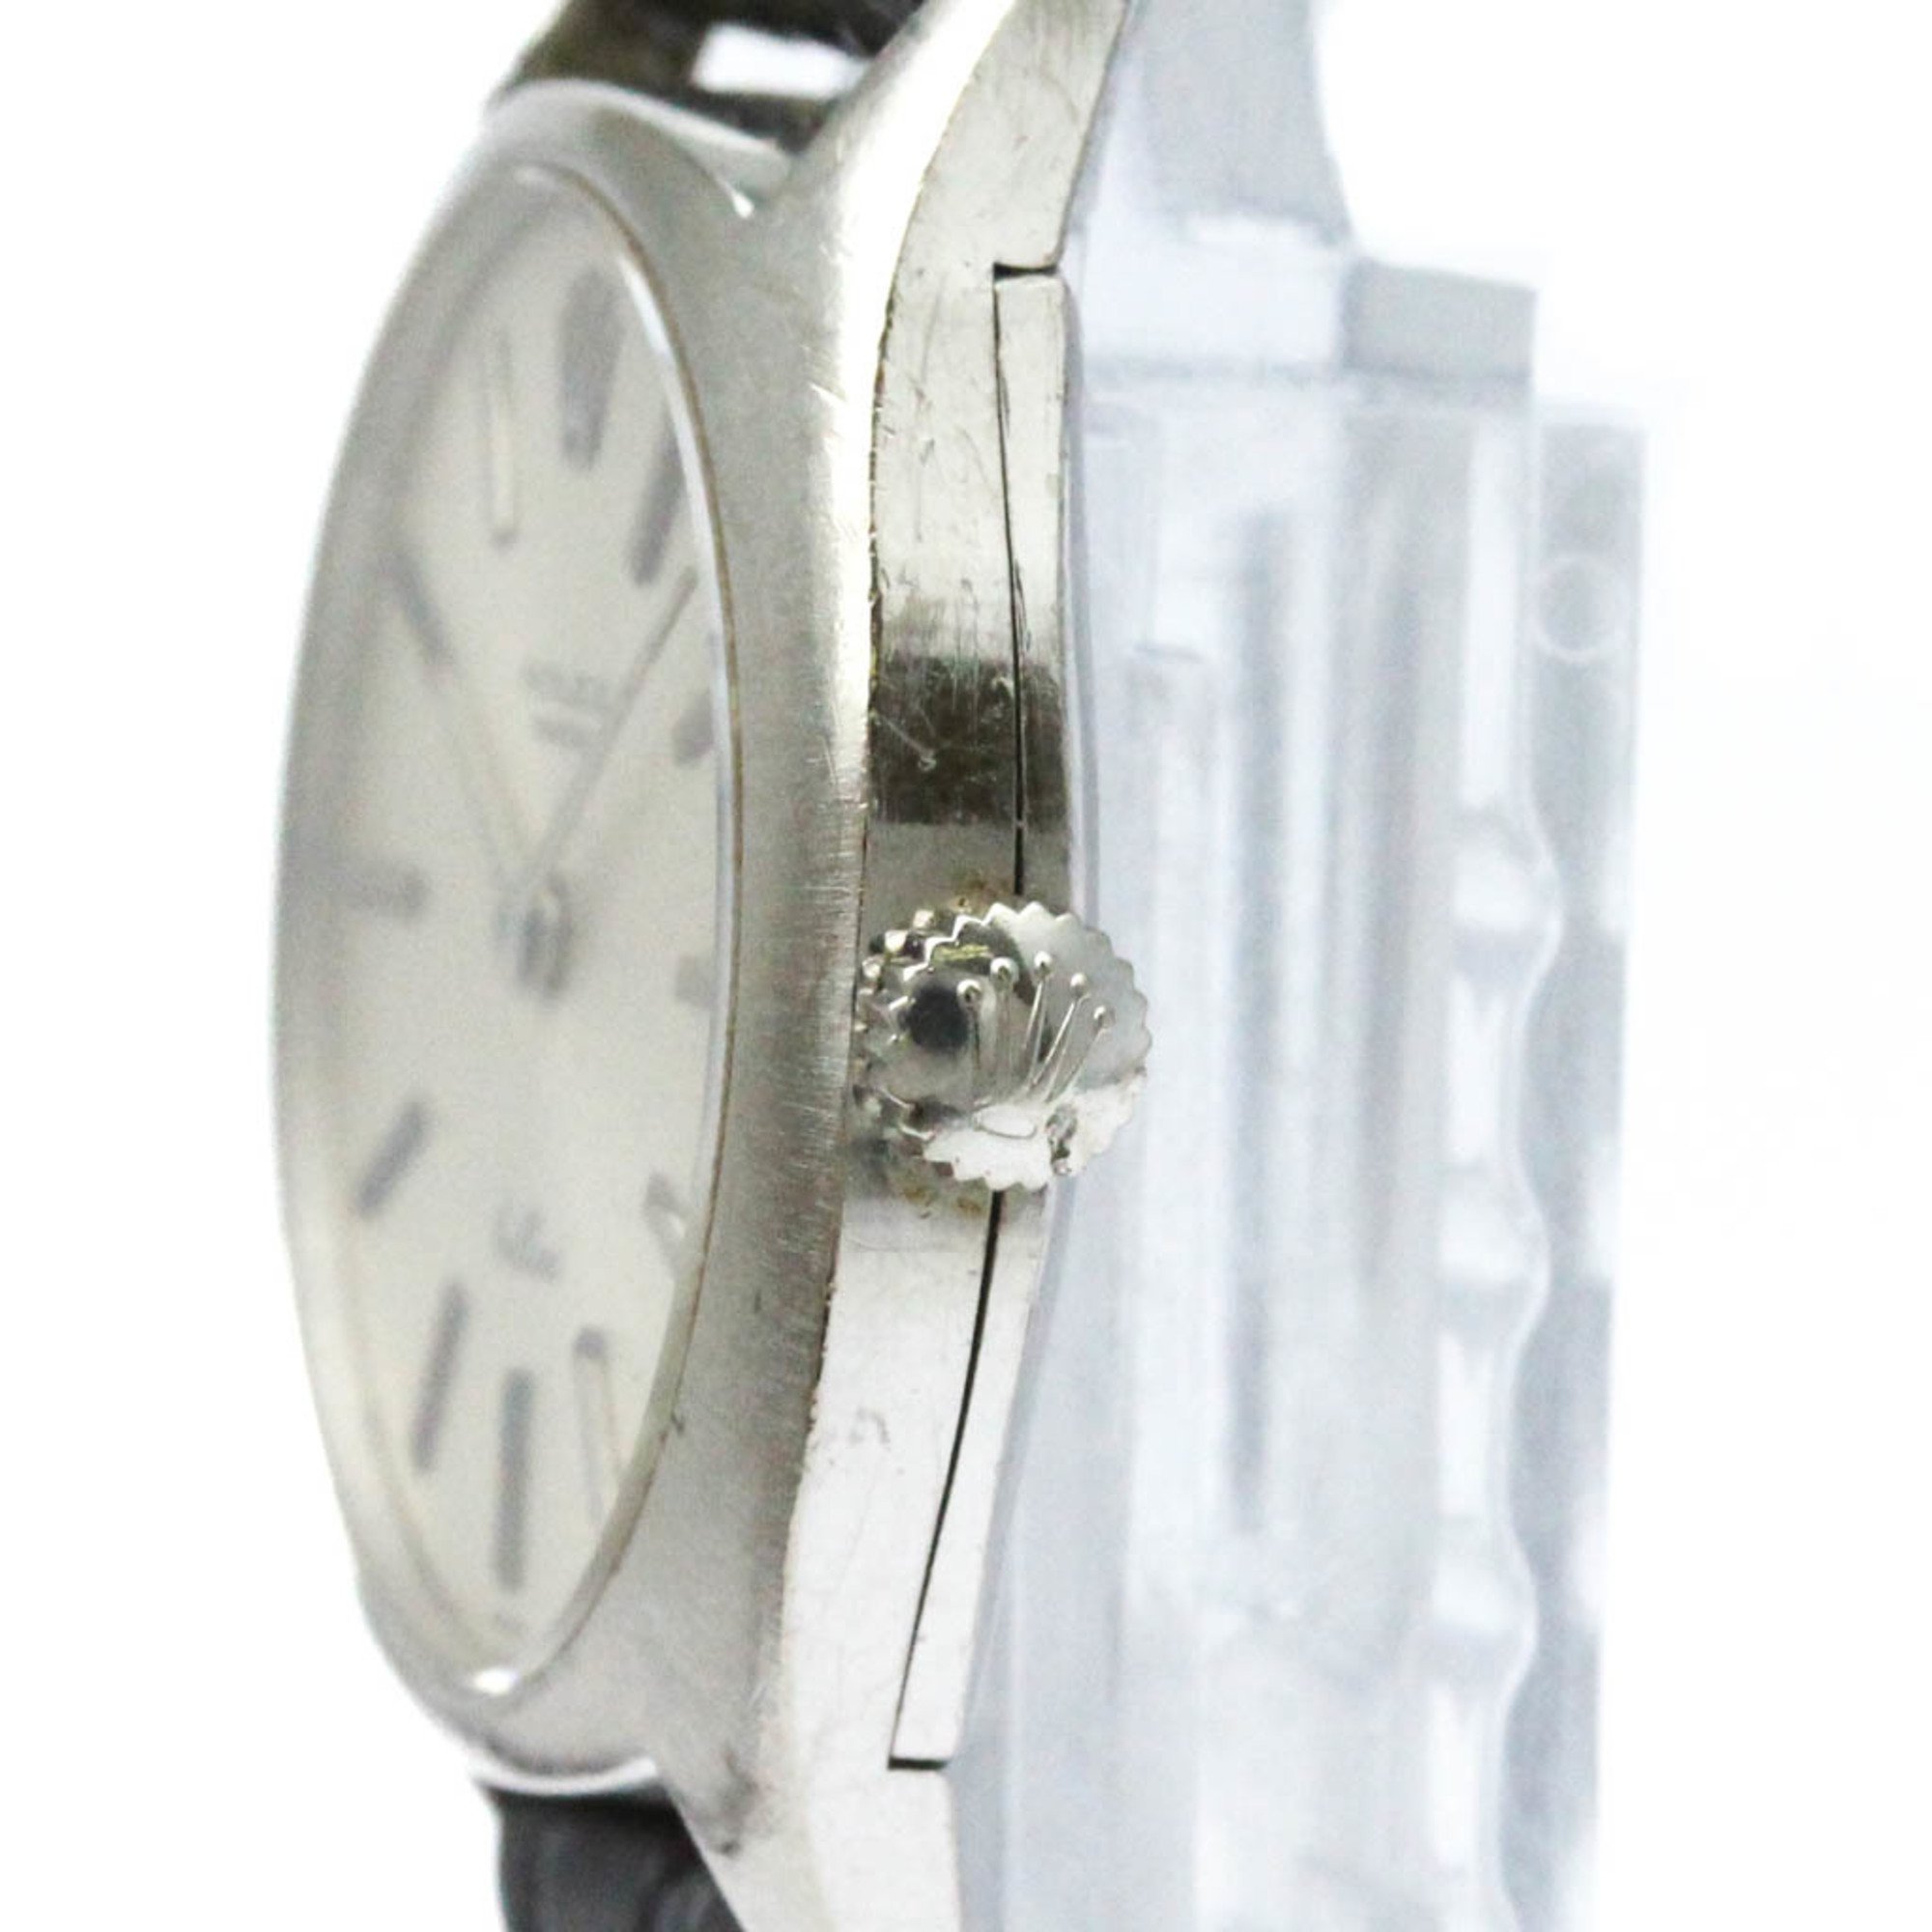 Vintage ROLEX Cellini 18K White Gold Hand-Winding Ladies Watch 3800 BF553401